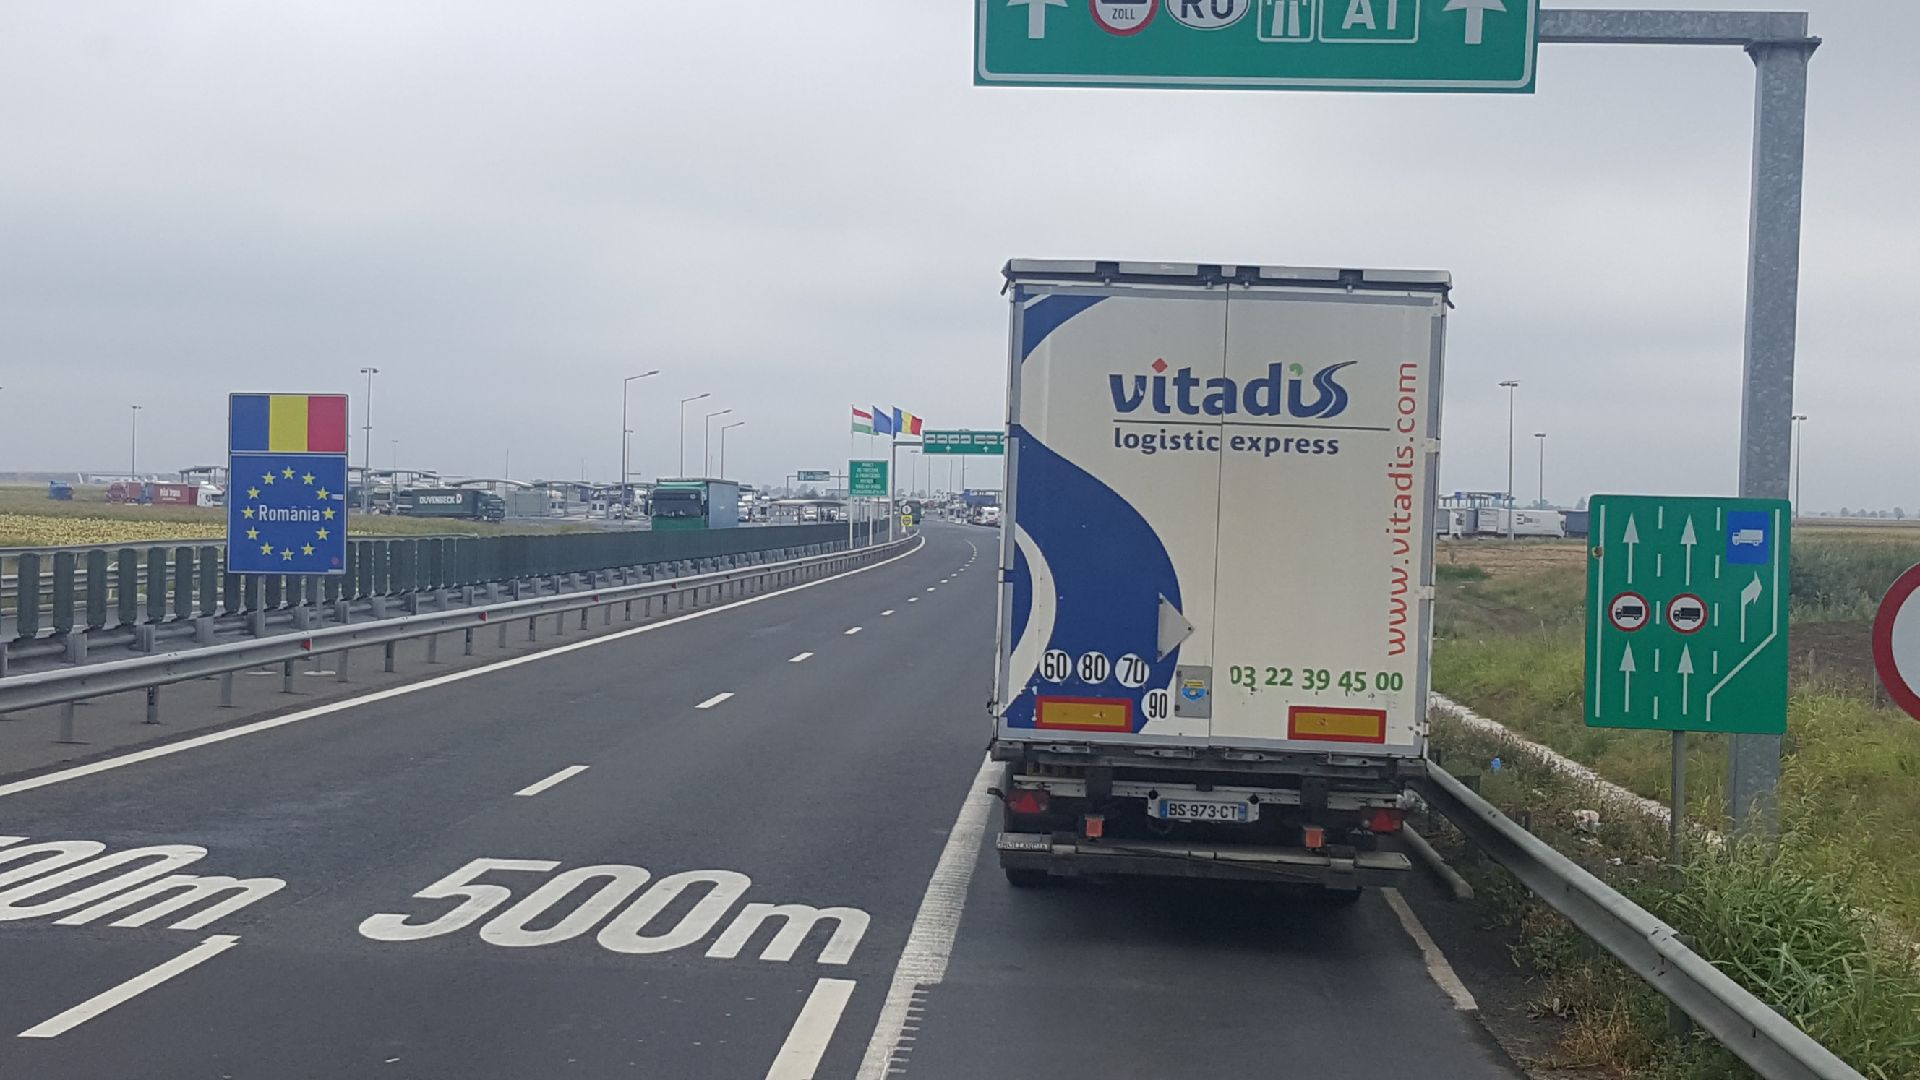 Vitadis road transport from Germany to Romania